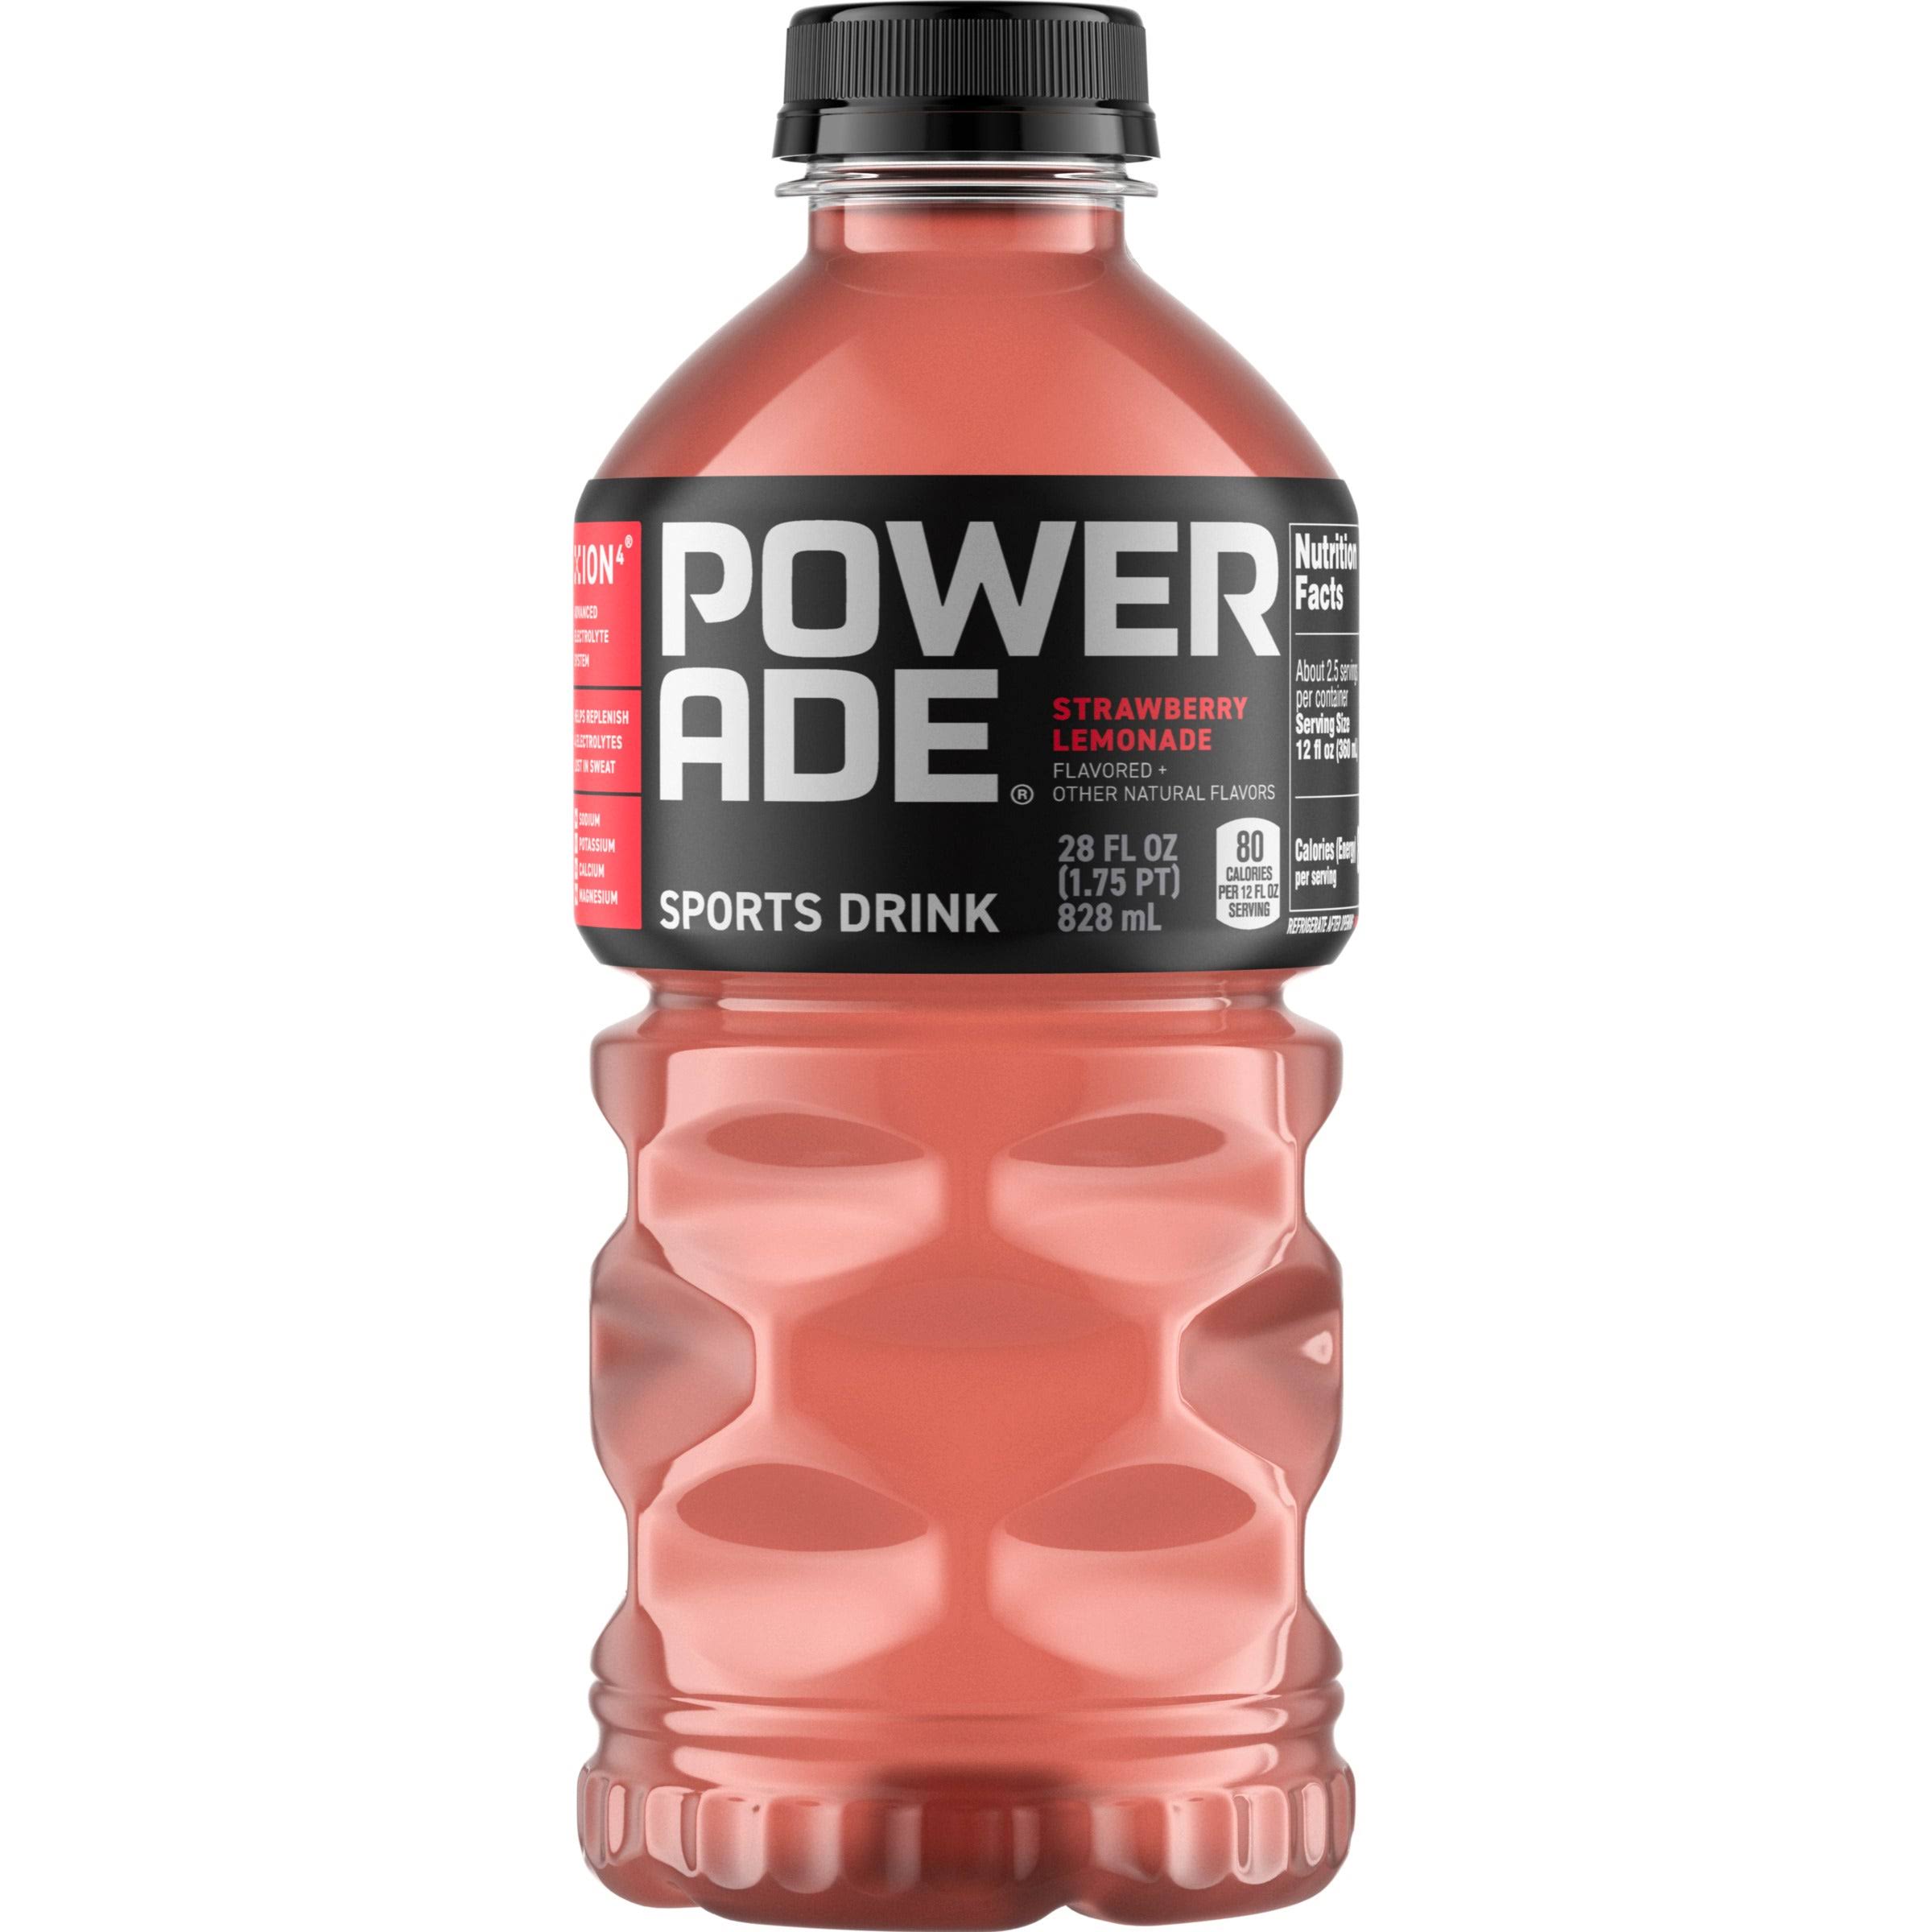 Power Ade Sports Drink, Strawberry Lemonade - 28 fl oz